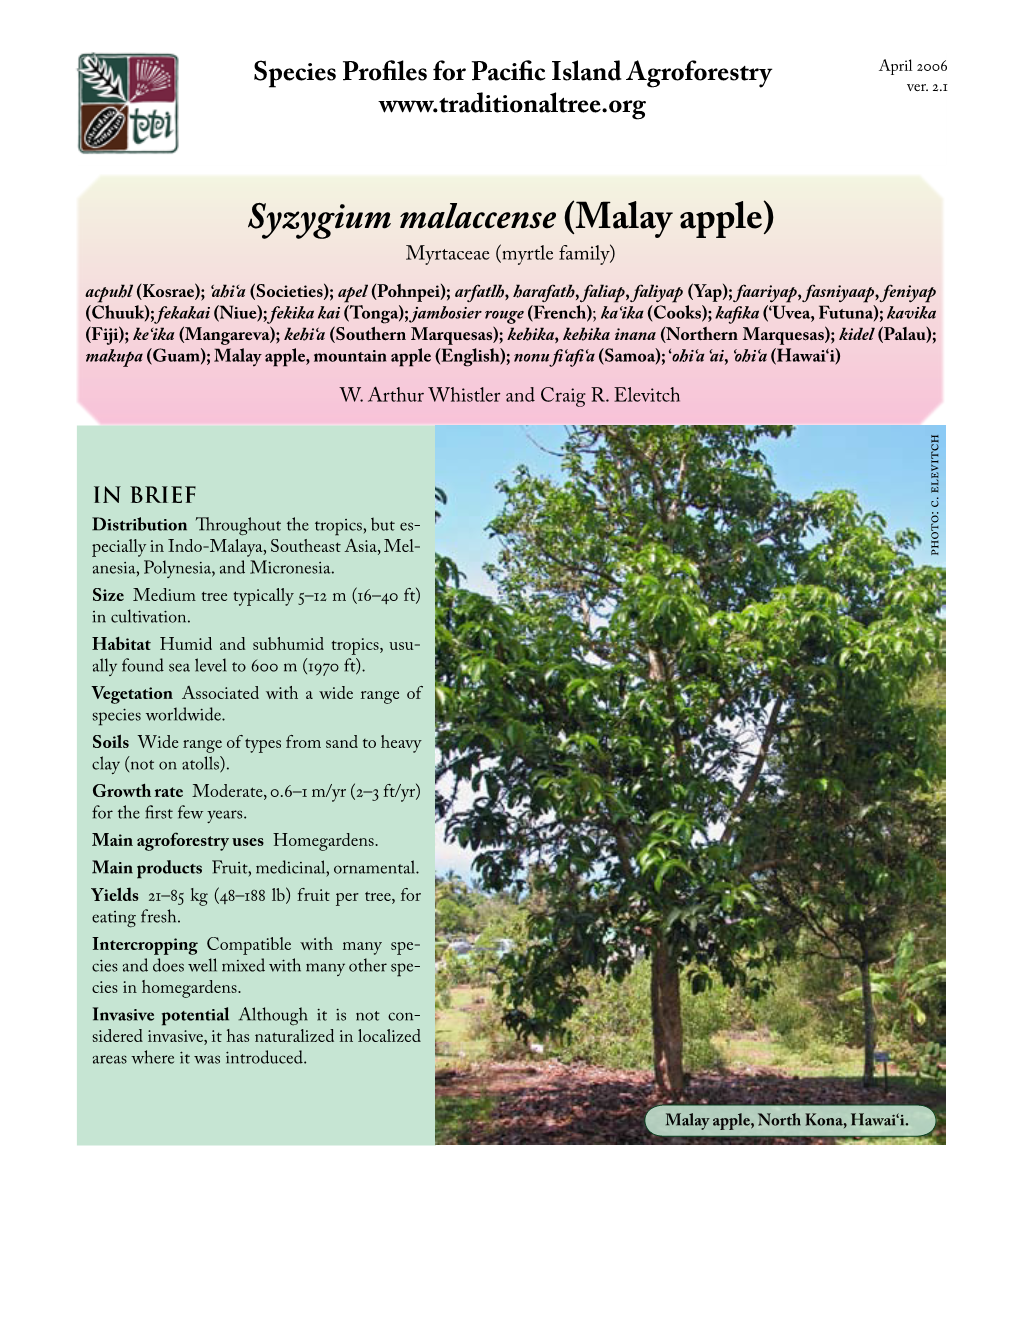 Syzygium Malaccense (Malay Apple)